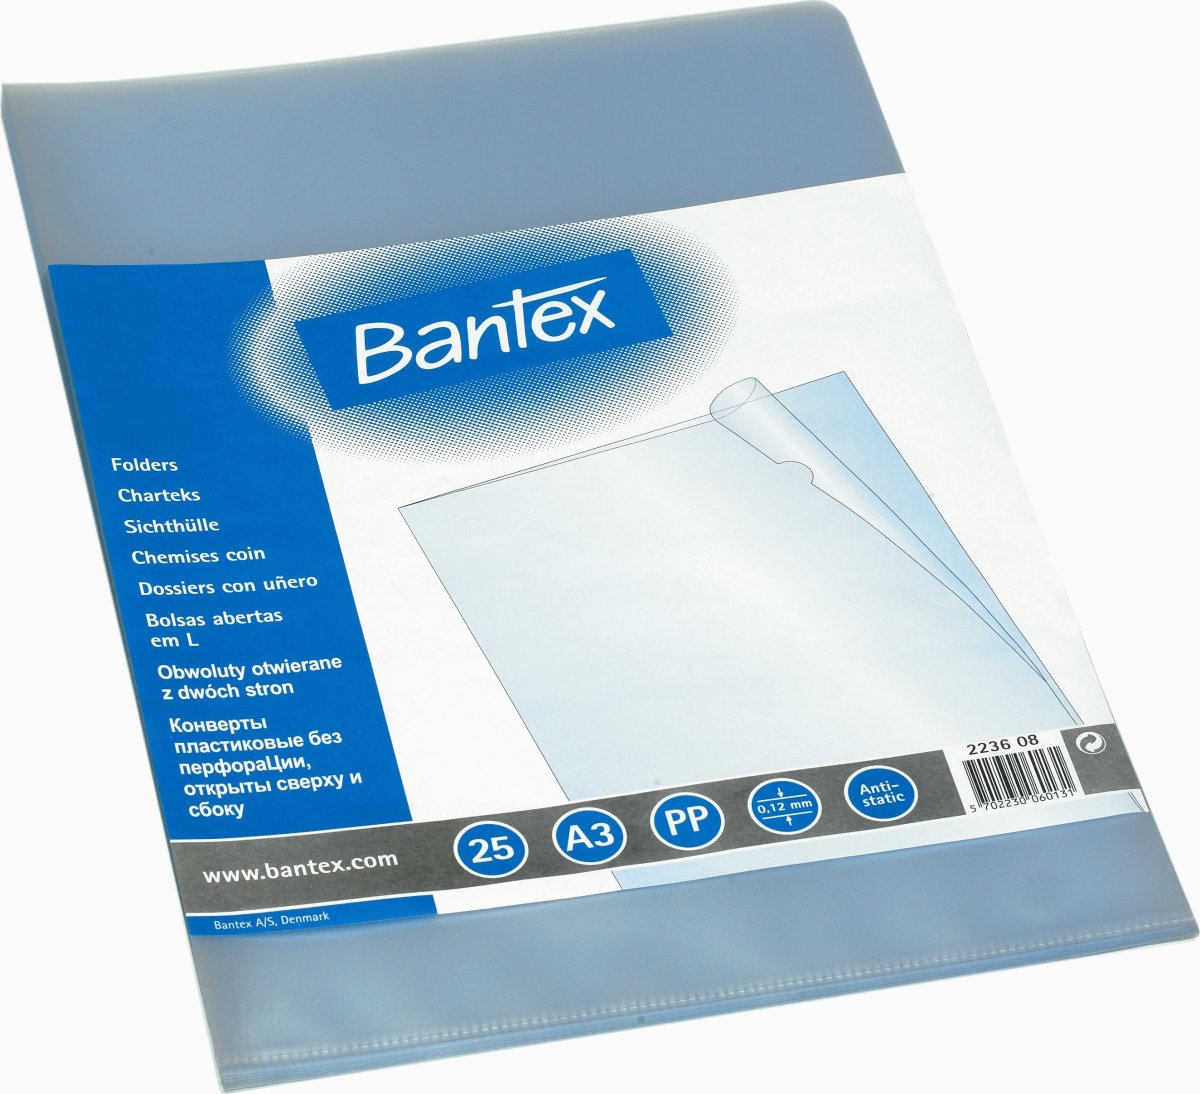 Bantex Chartek | A3 | 120 my | 25 stk.